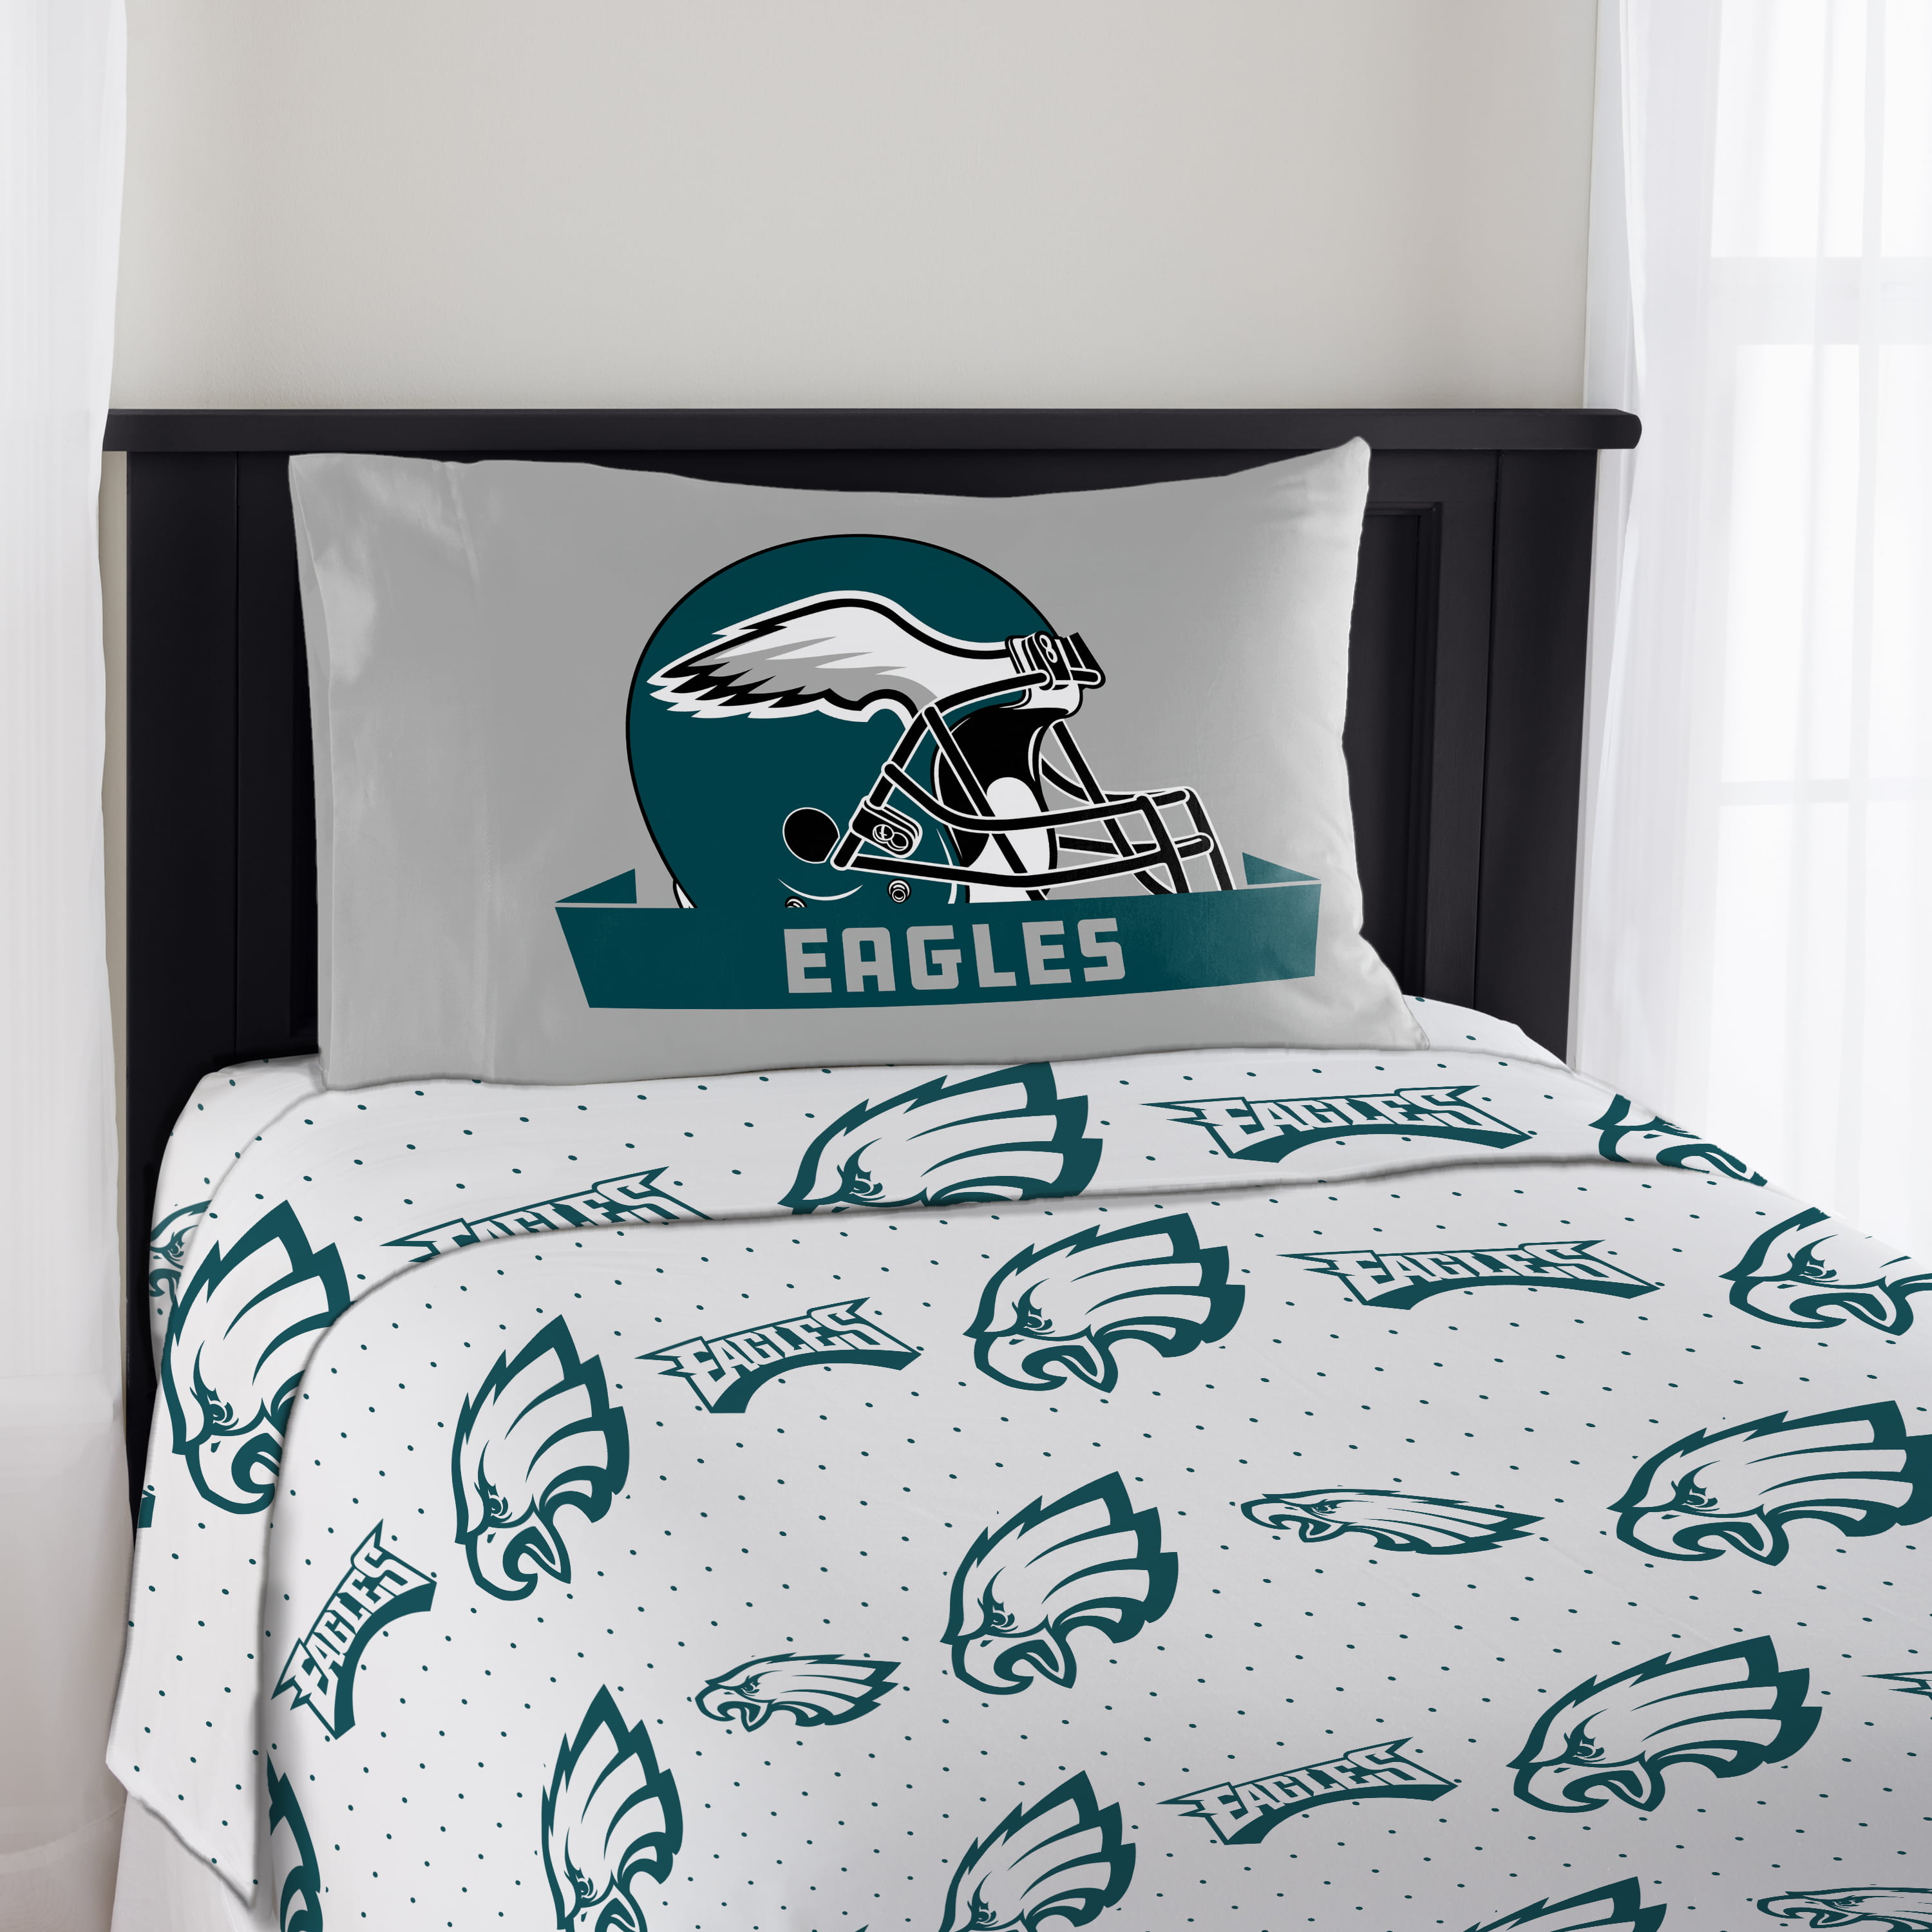 Details about   Philadelphia Eagles Fitted Sheet Deep Pocket Bed Sheet Pillowcase Bedding Set 